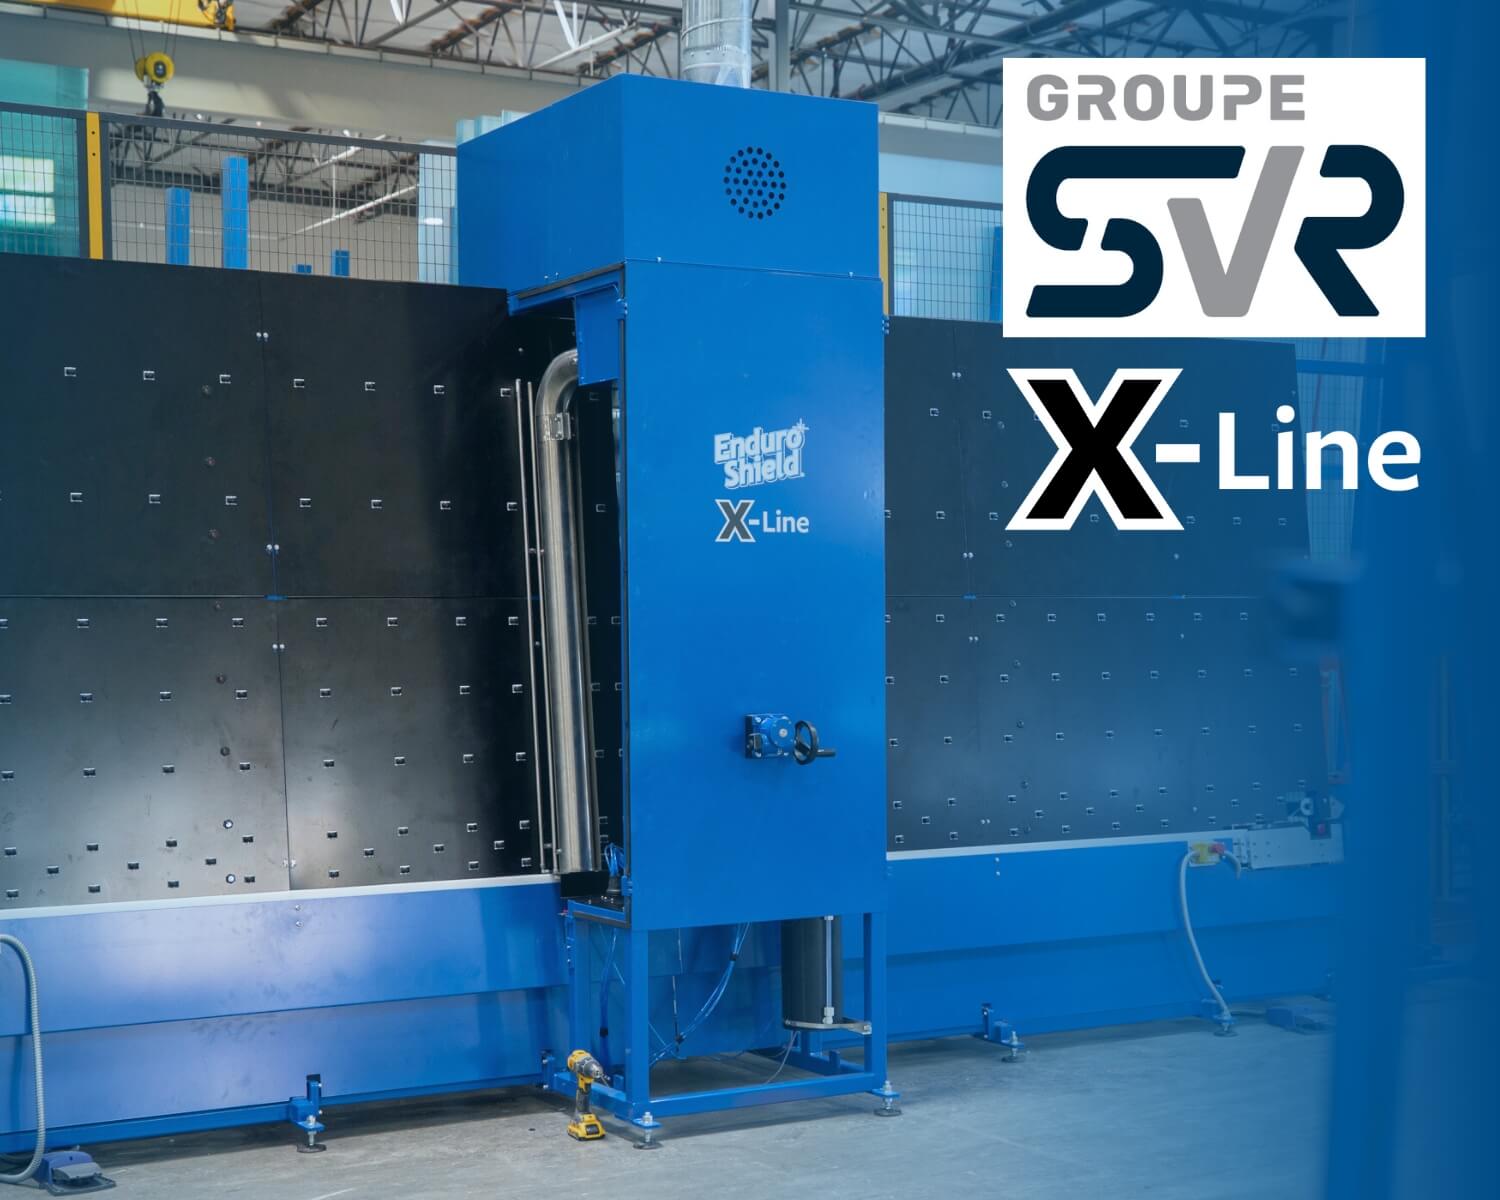 EnduroShield X-Line Machine with Groupe SVR logo